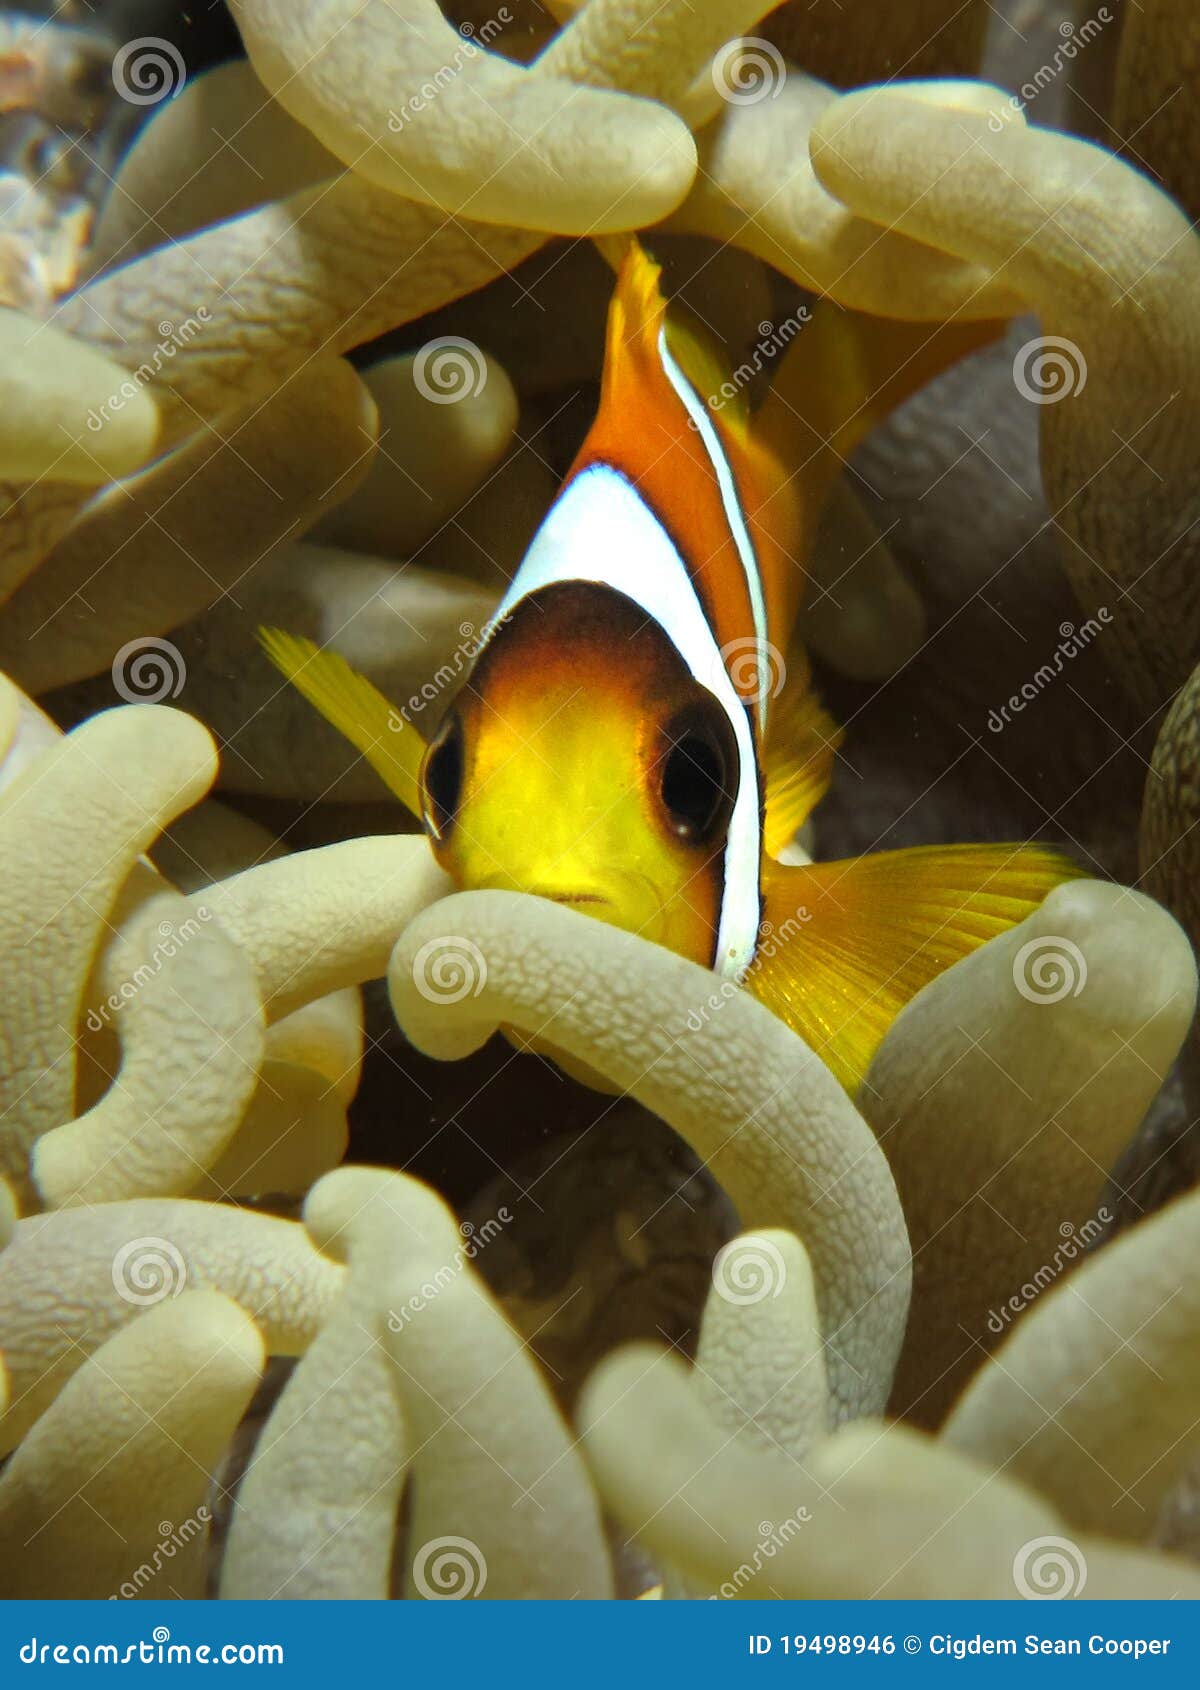 Two Twobar Anemonefish Laying In Their Anemone. Royalty-Free Stock ...